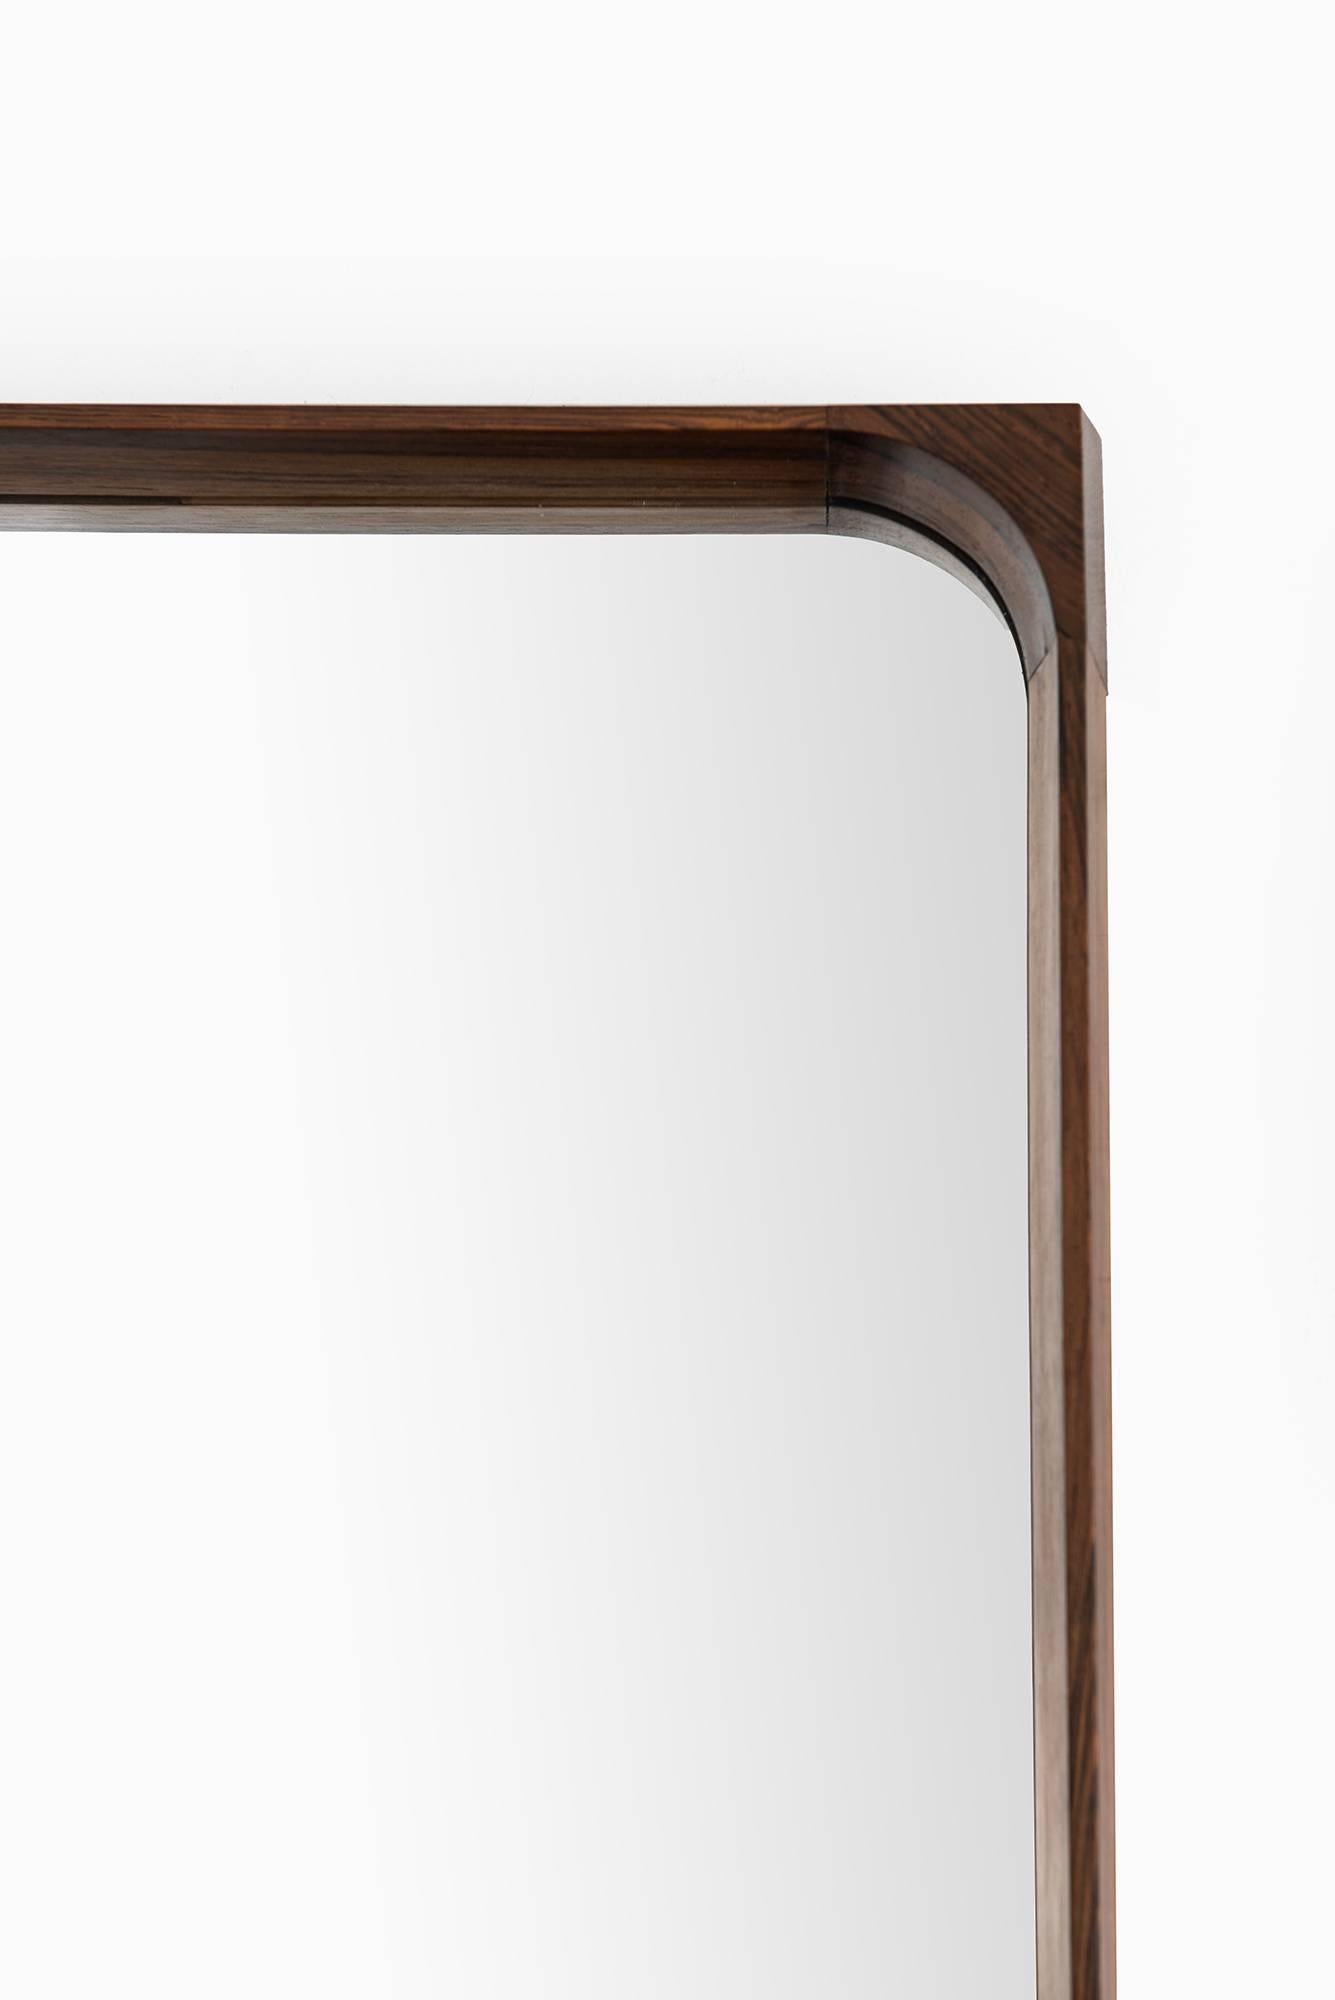 Scandinavian Modern Rosewood Mirror Produced in Denmark